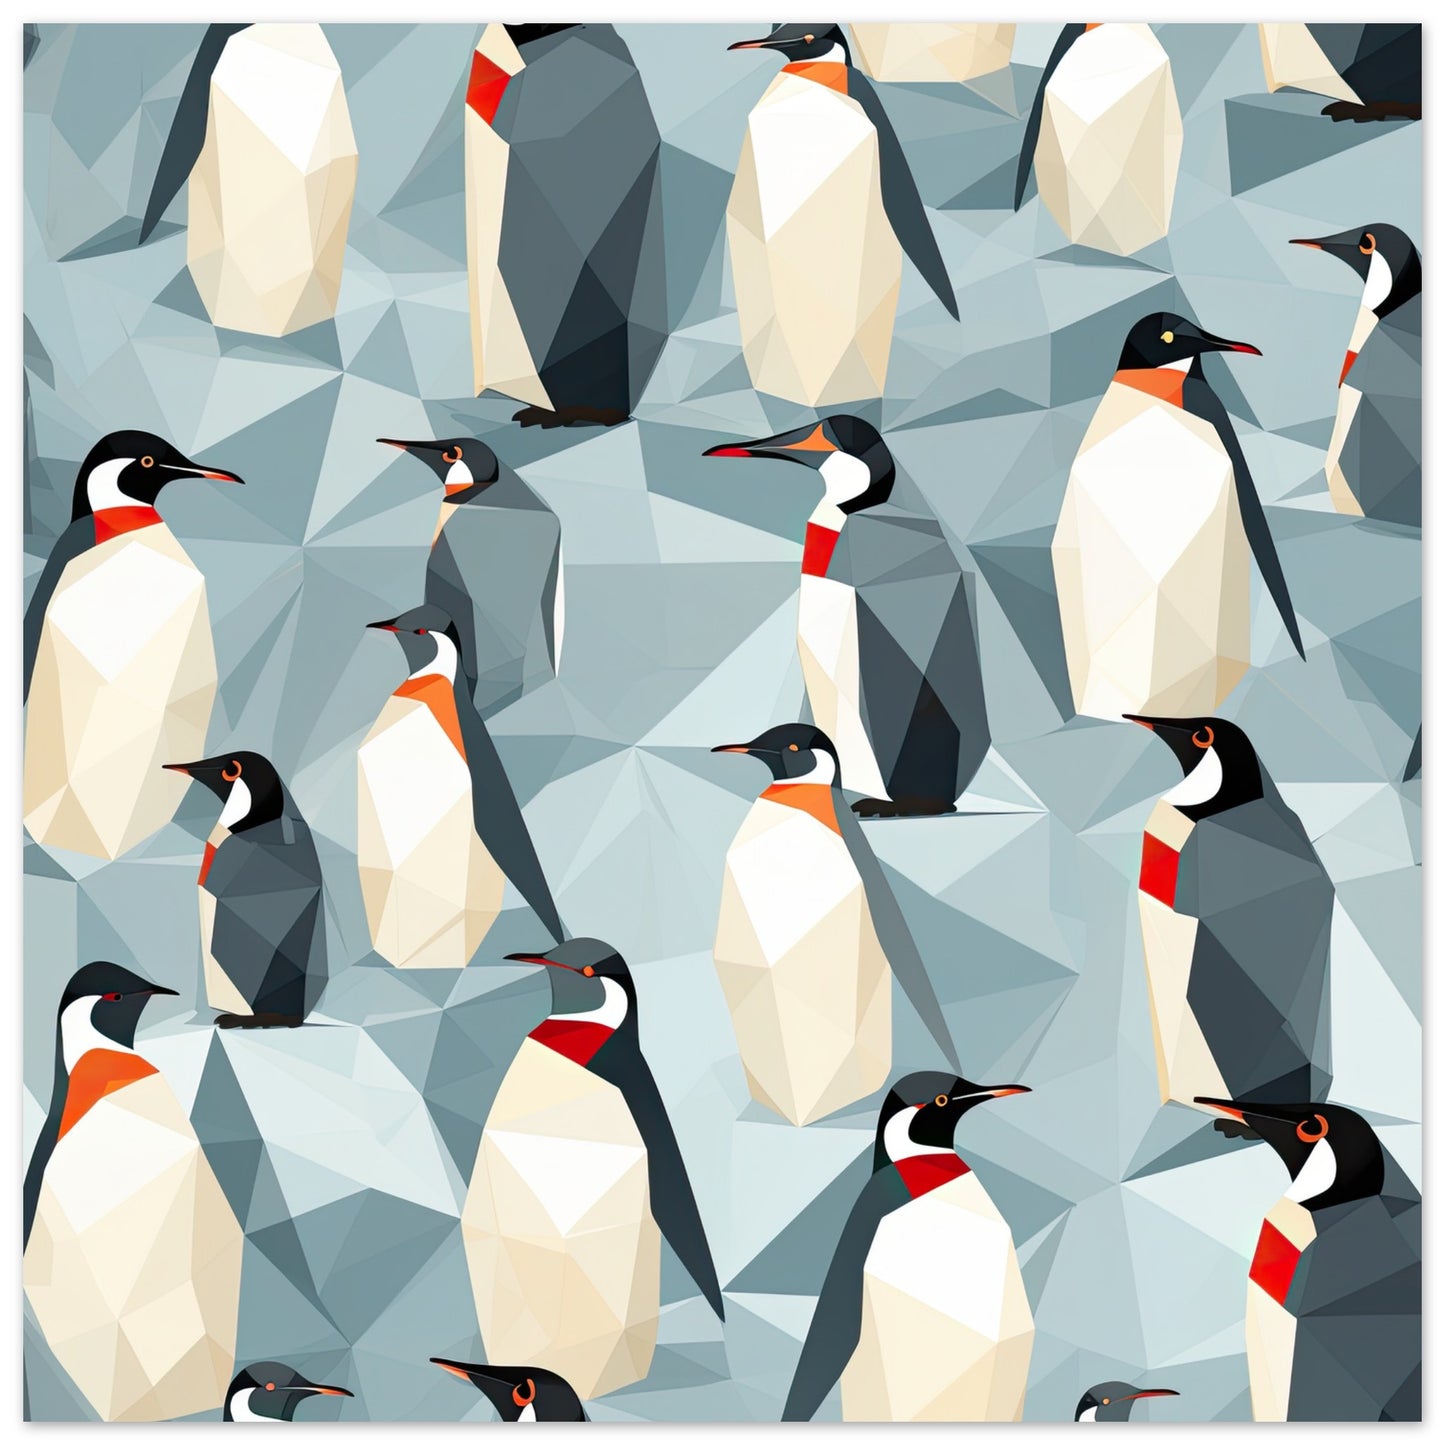 Penguin Convention Artwork AllStyleArt Matte Poster 30x30 cm / 12x12" 